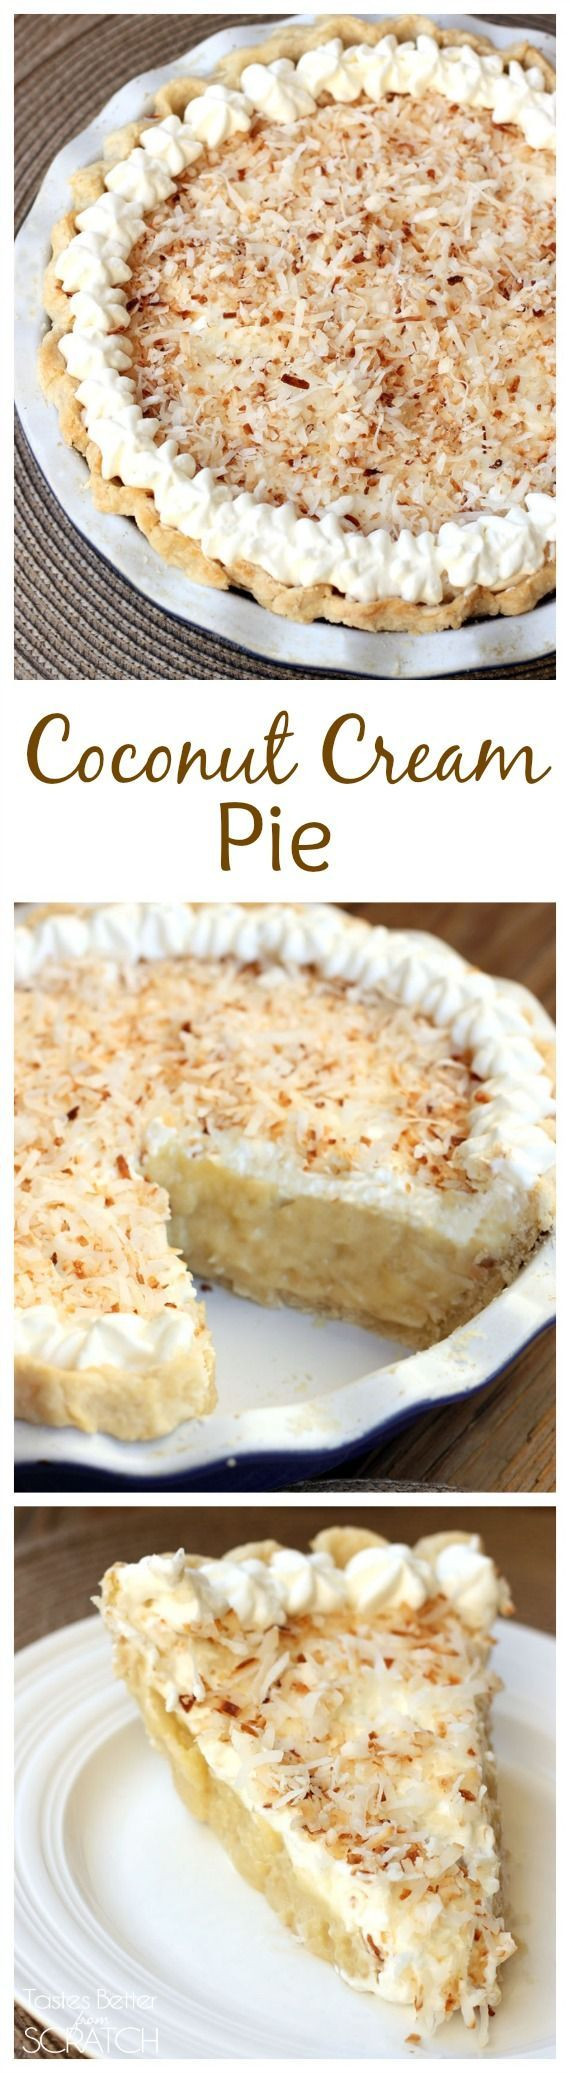 Pioneer Woman Coconut Cream Pie
 Best 25 American pie ideas on Pinterest